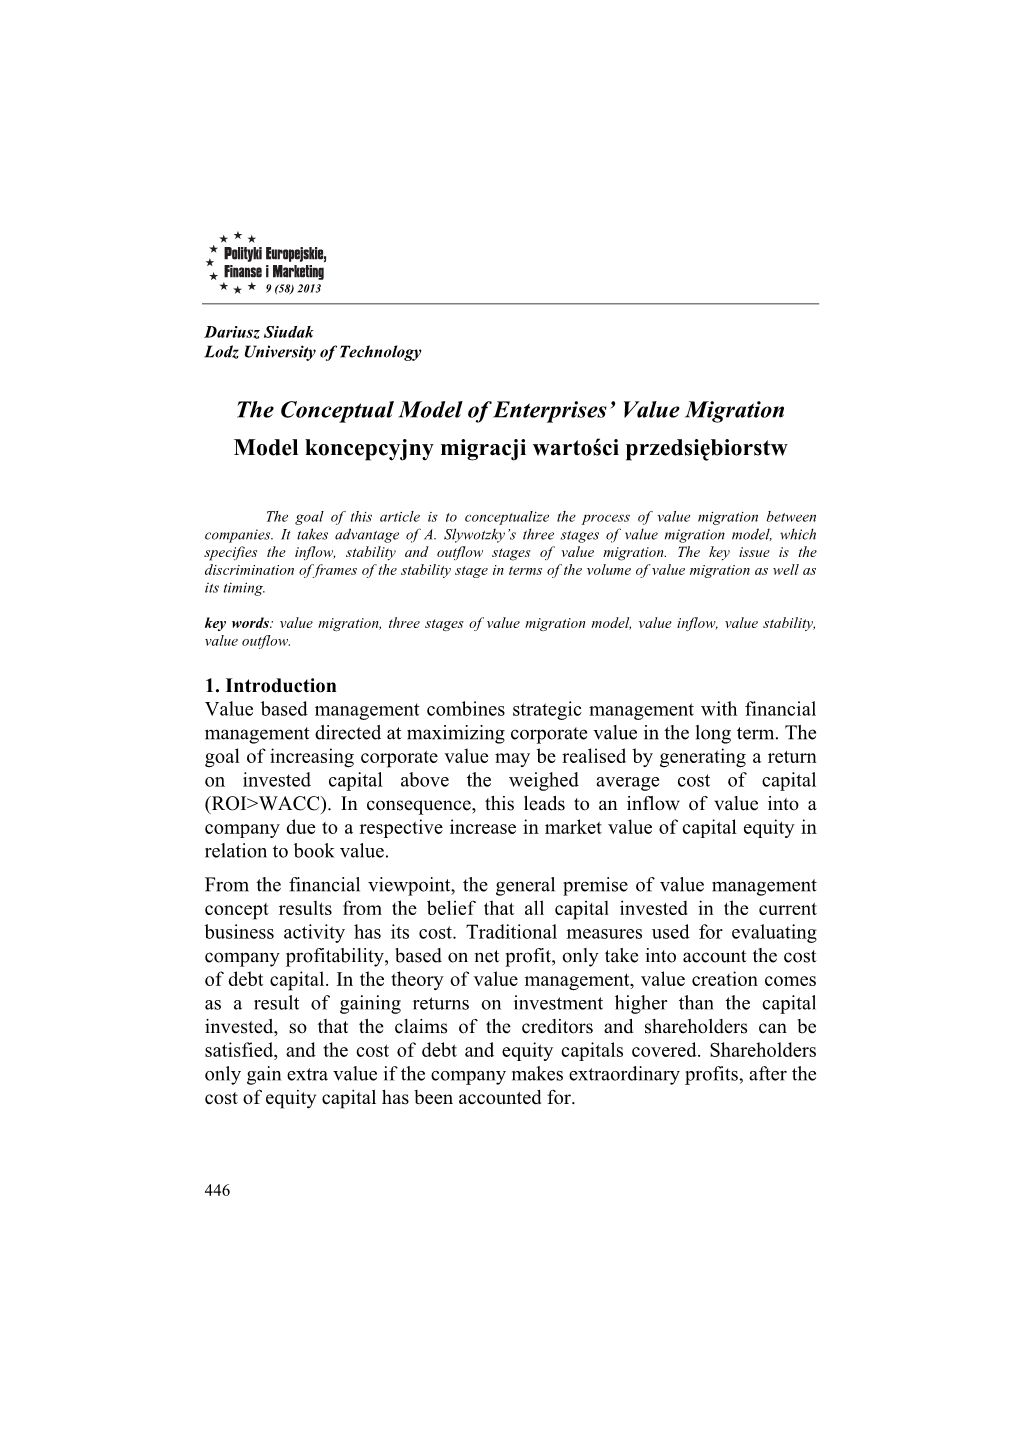 The Conceptual Model of Enterprises' Value Migration Model Koncepcyjny